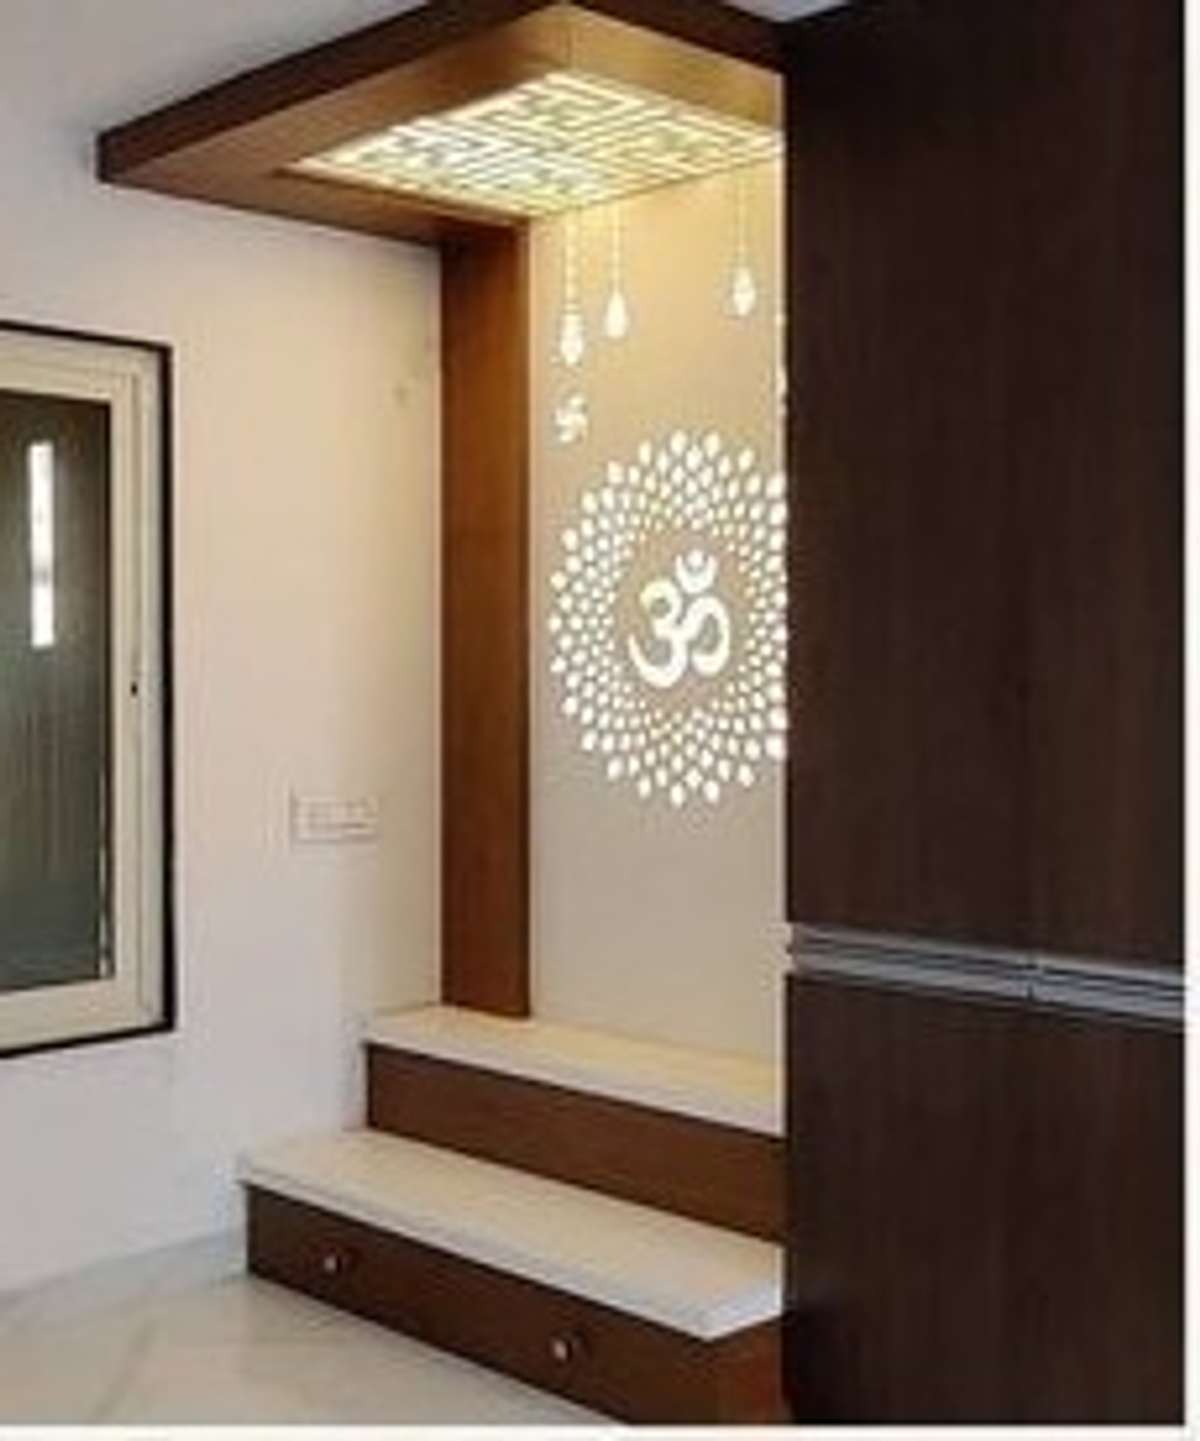 Furniture, Table, Ceiling, Lighting Designs by Interior Designer Yati enterprises, Bhopal | Kolo